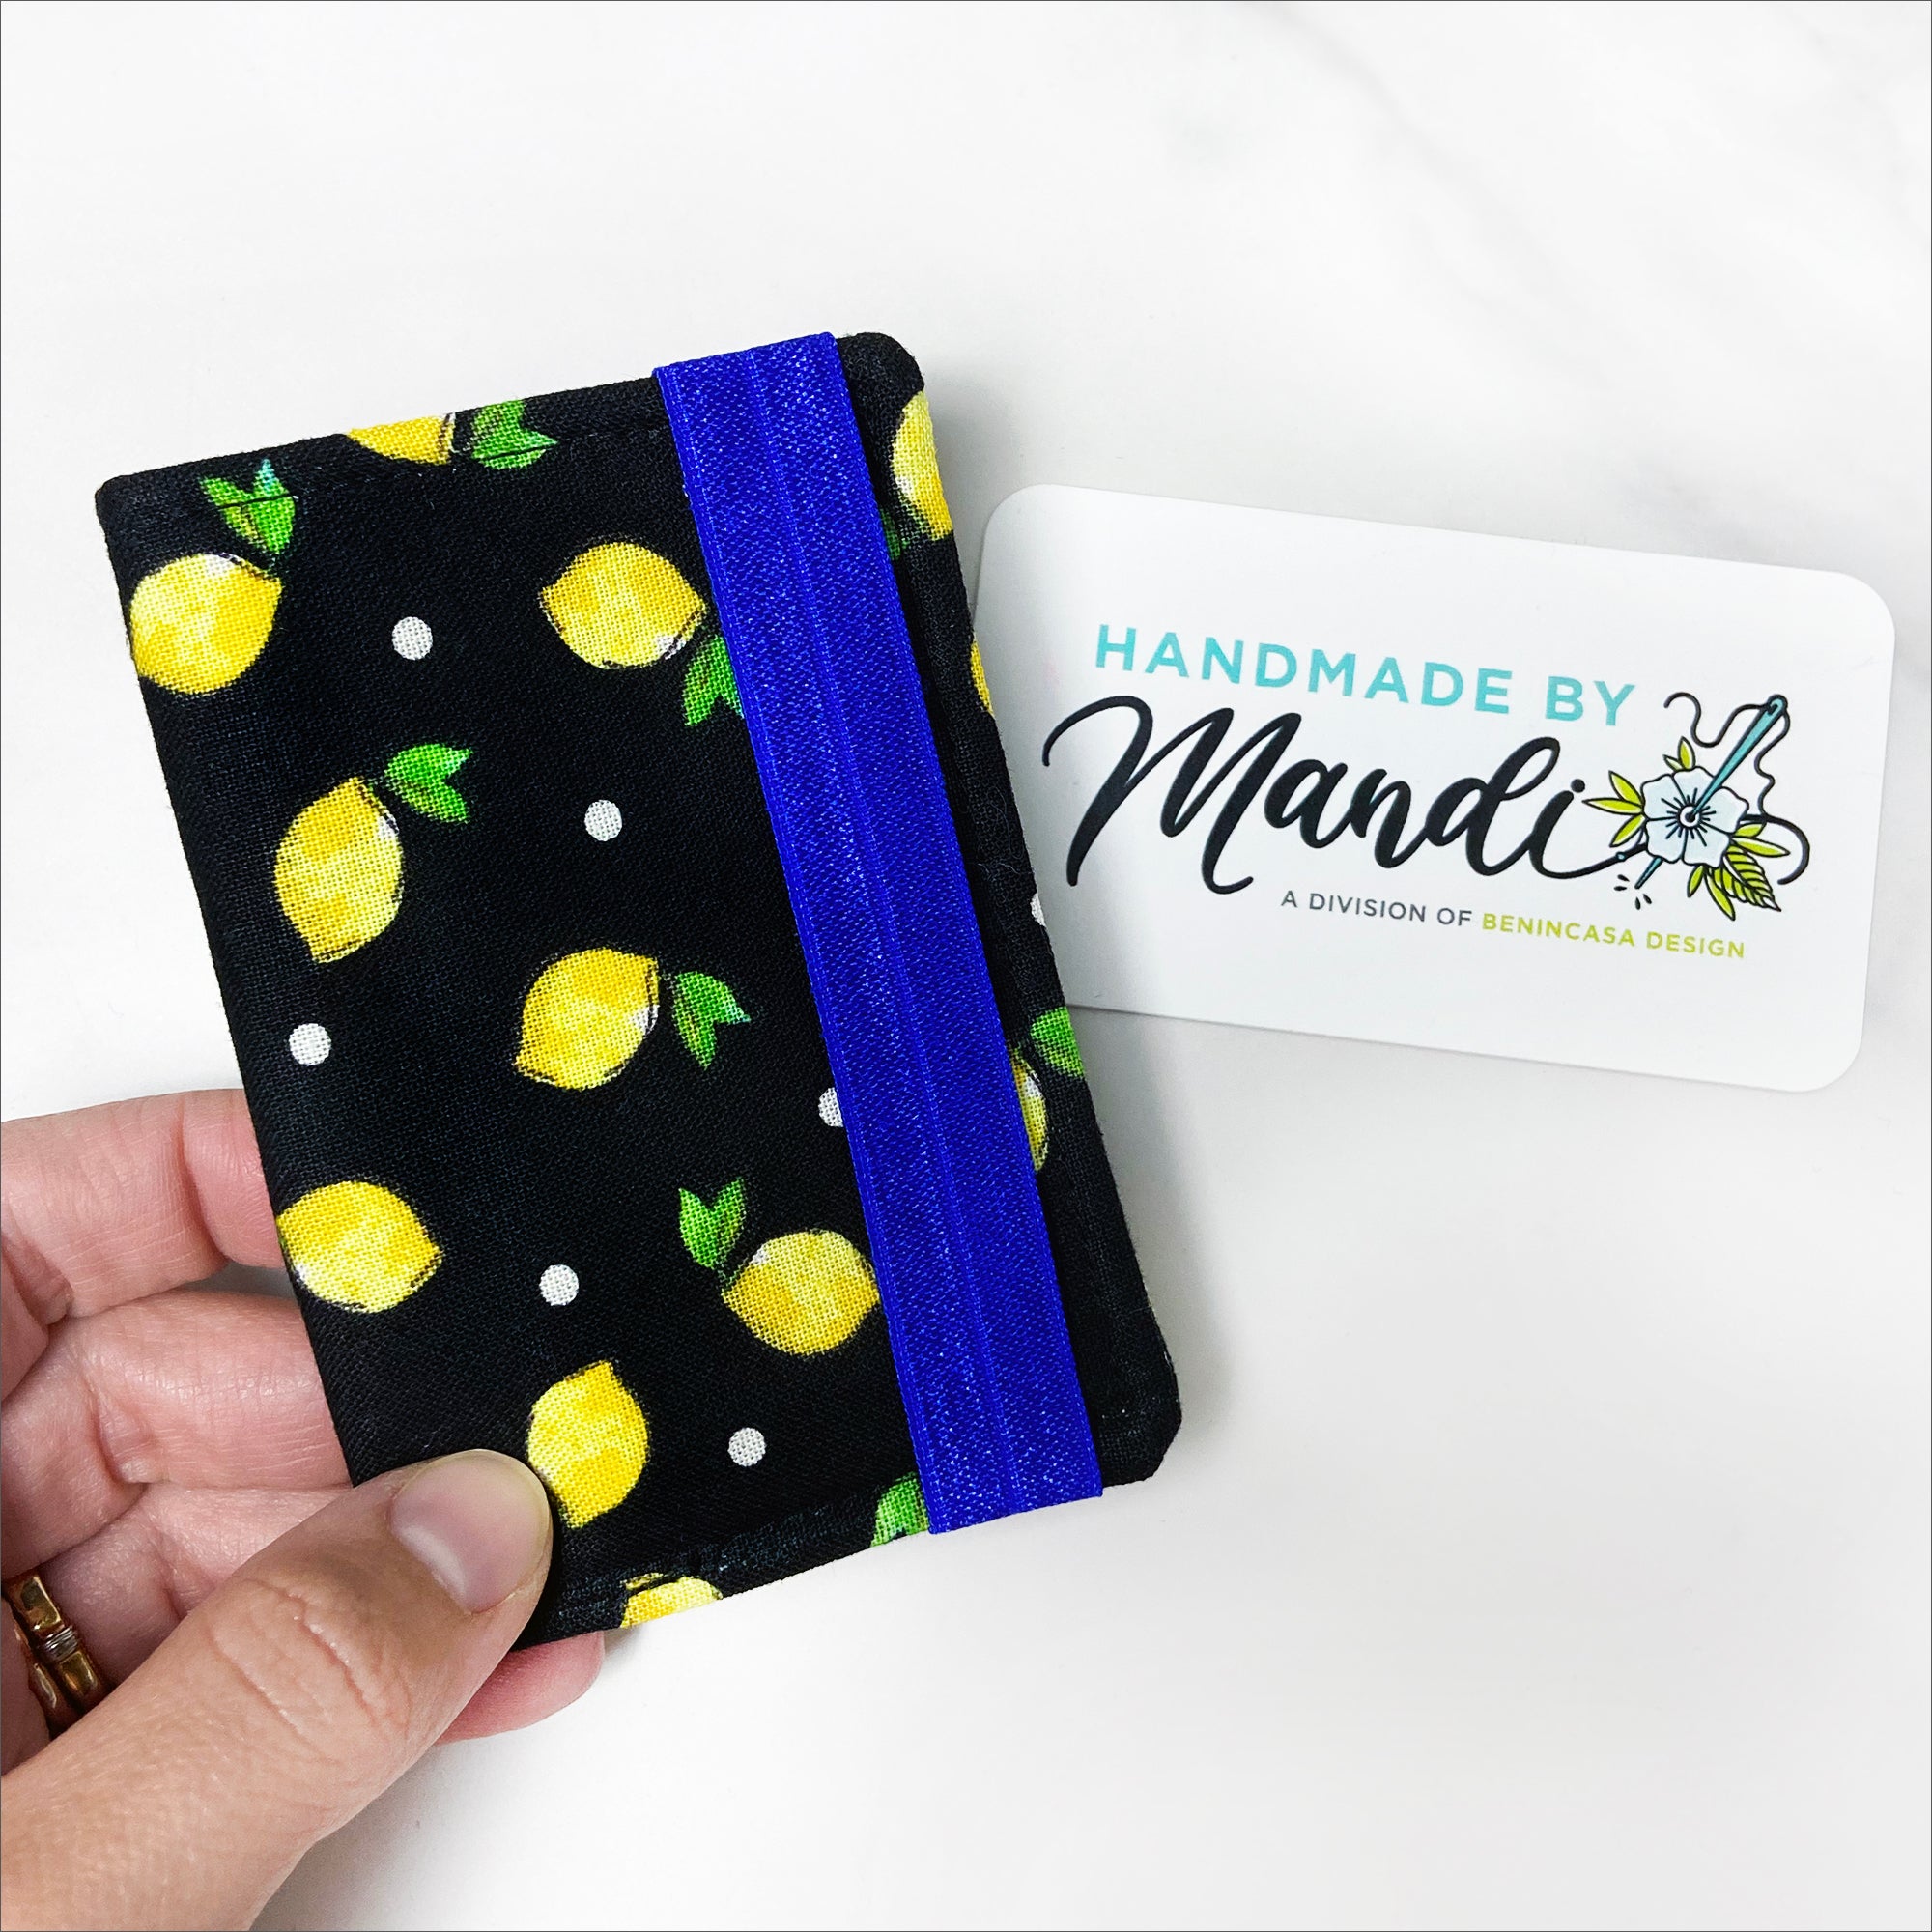 Mystery Card Holder – Feminine Fabric